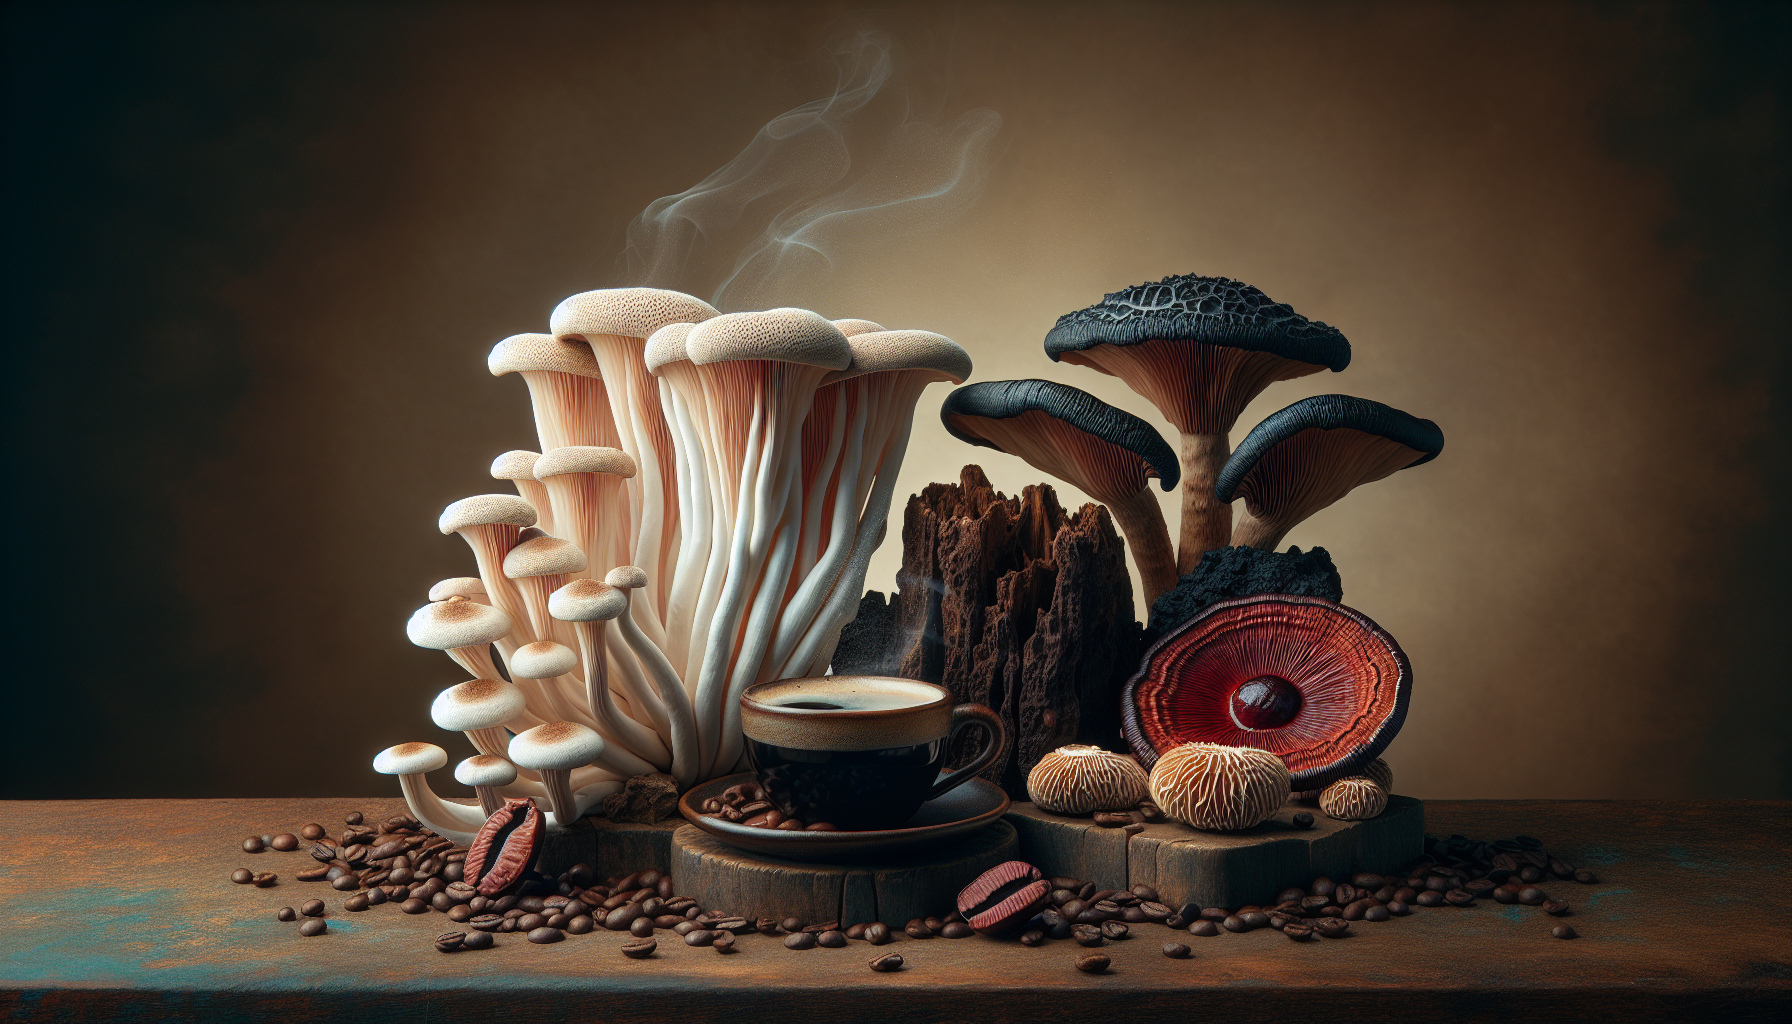 Variety of medicinal mushrooms including lion's mane, chaga, and reishi